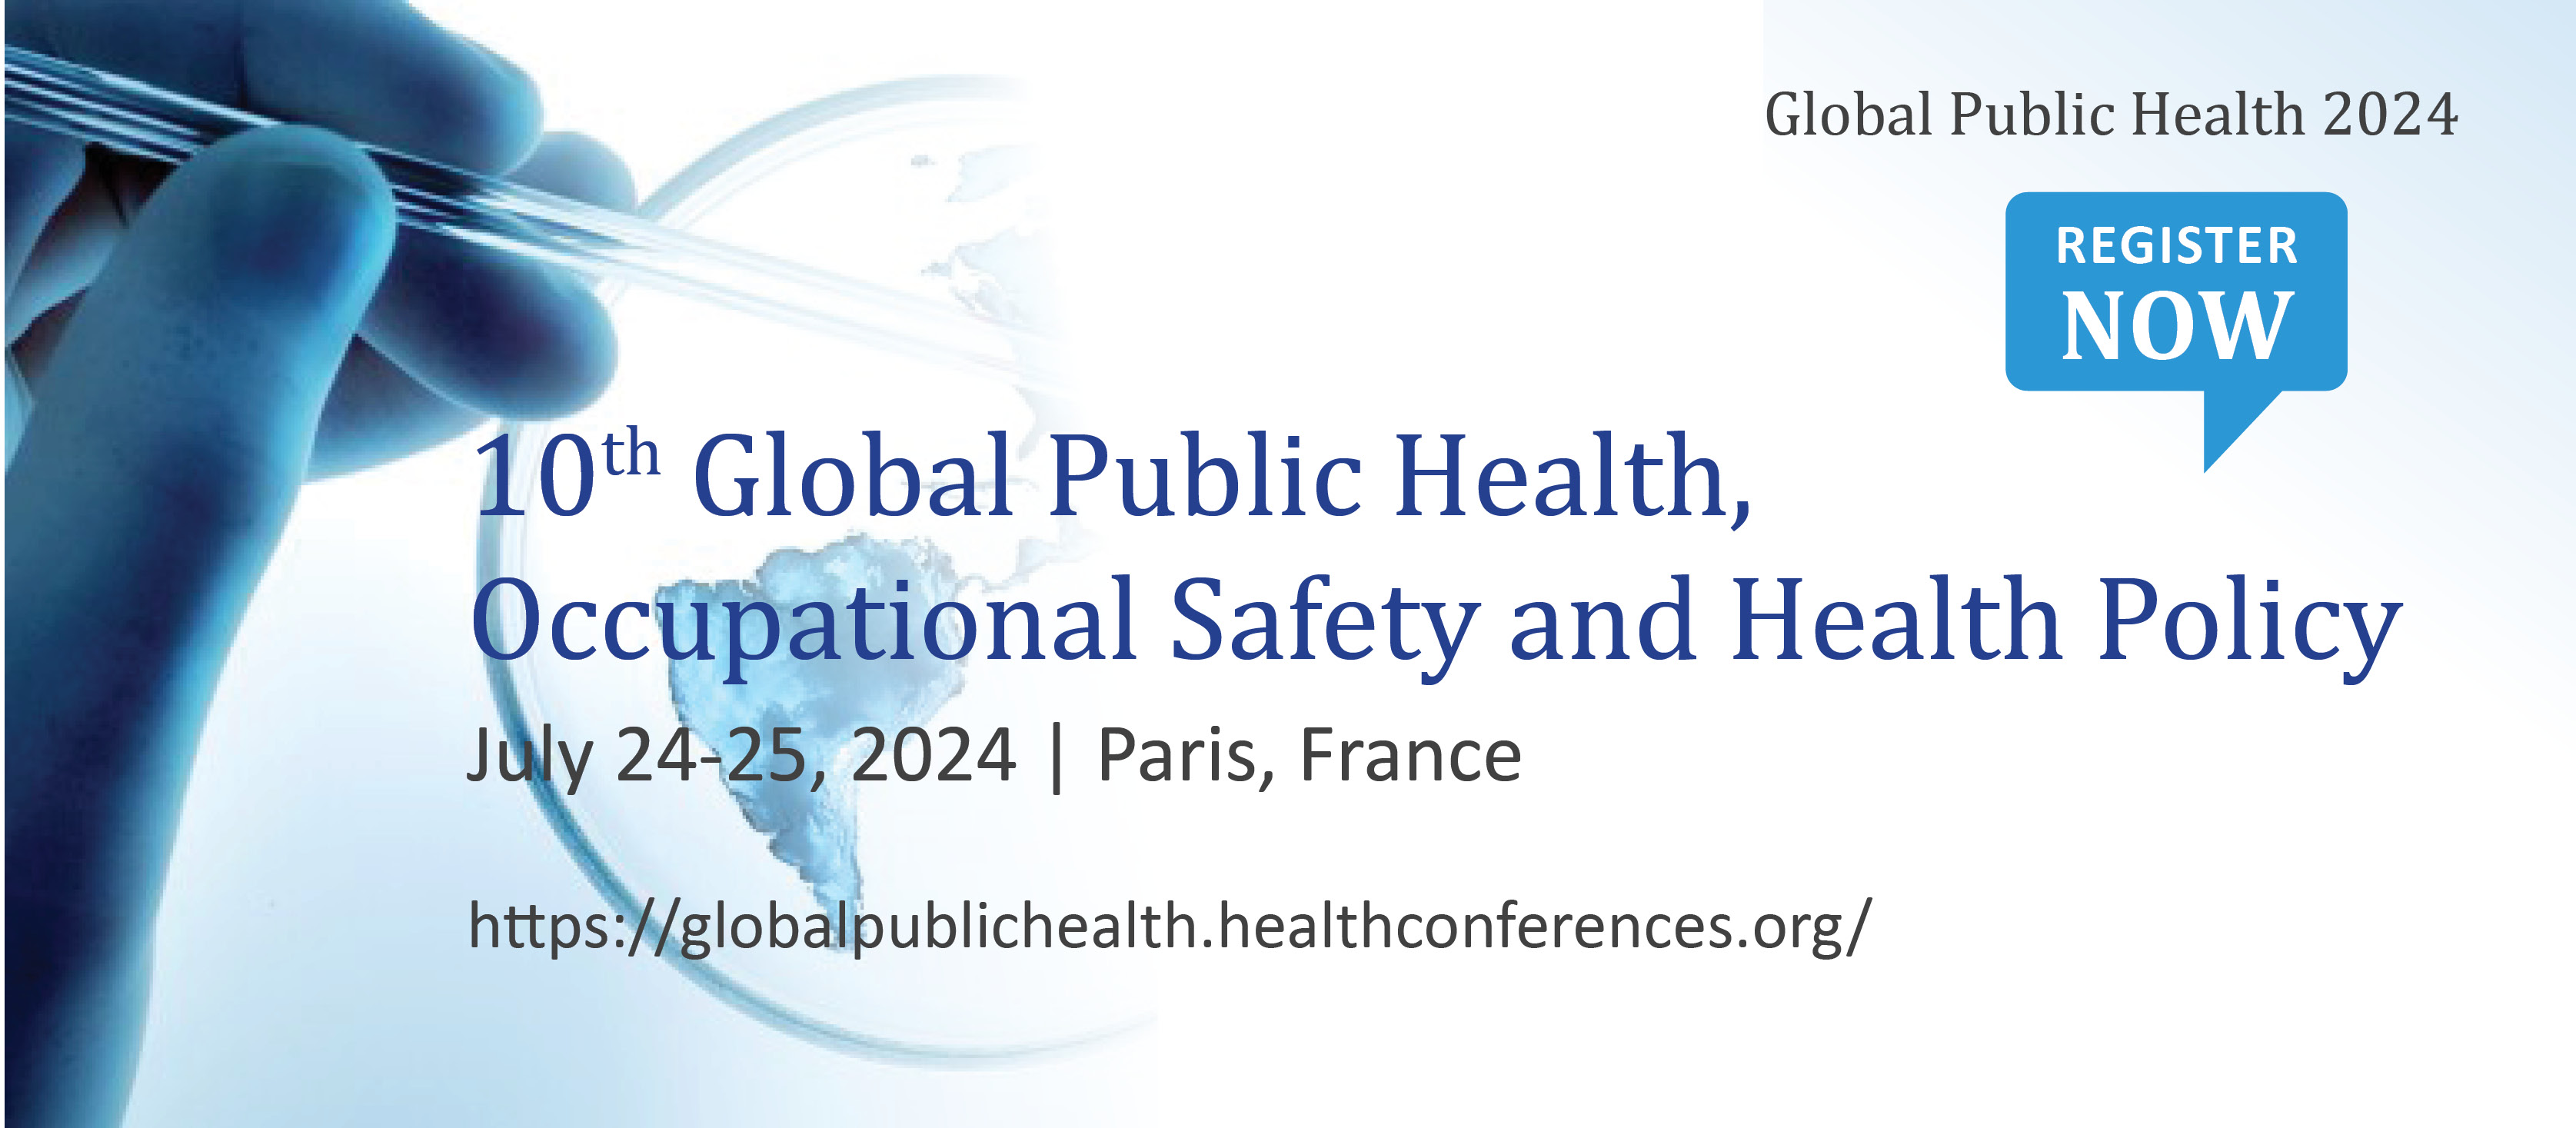 Global Public Health 2024